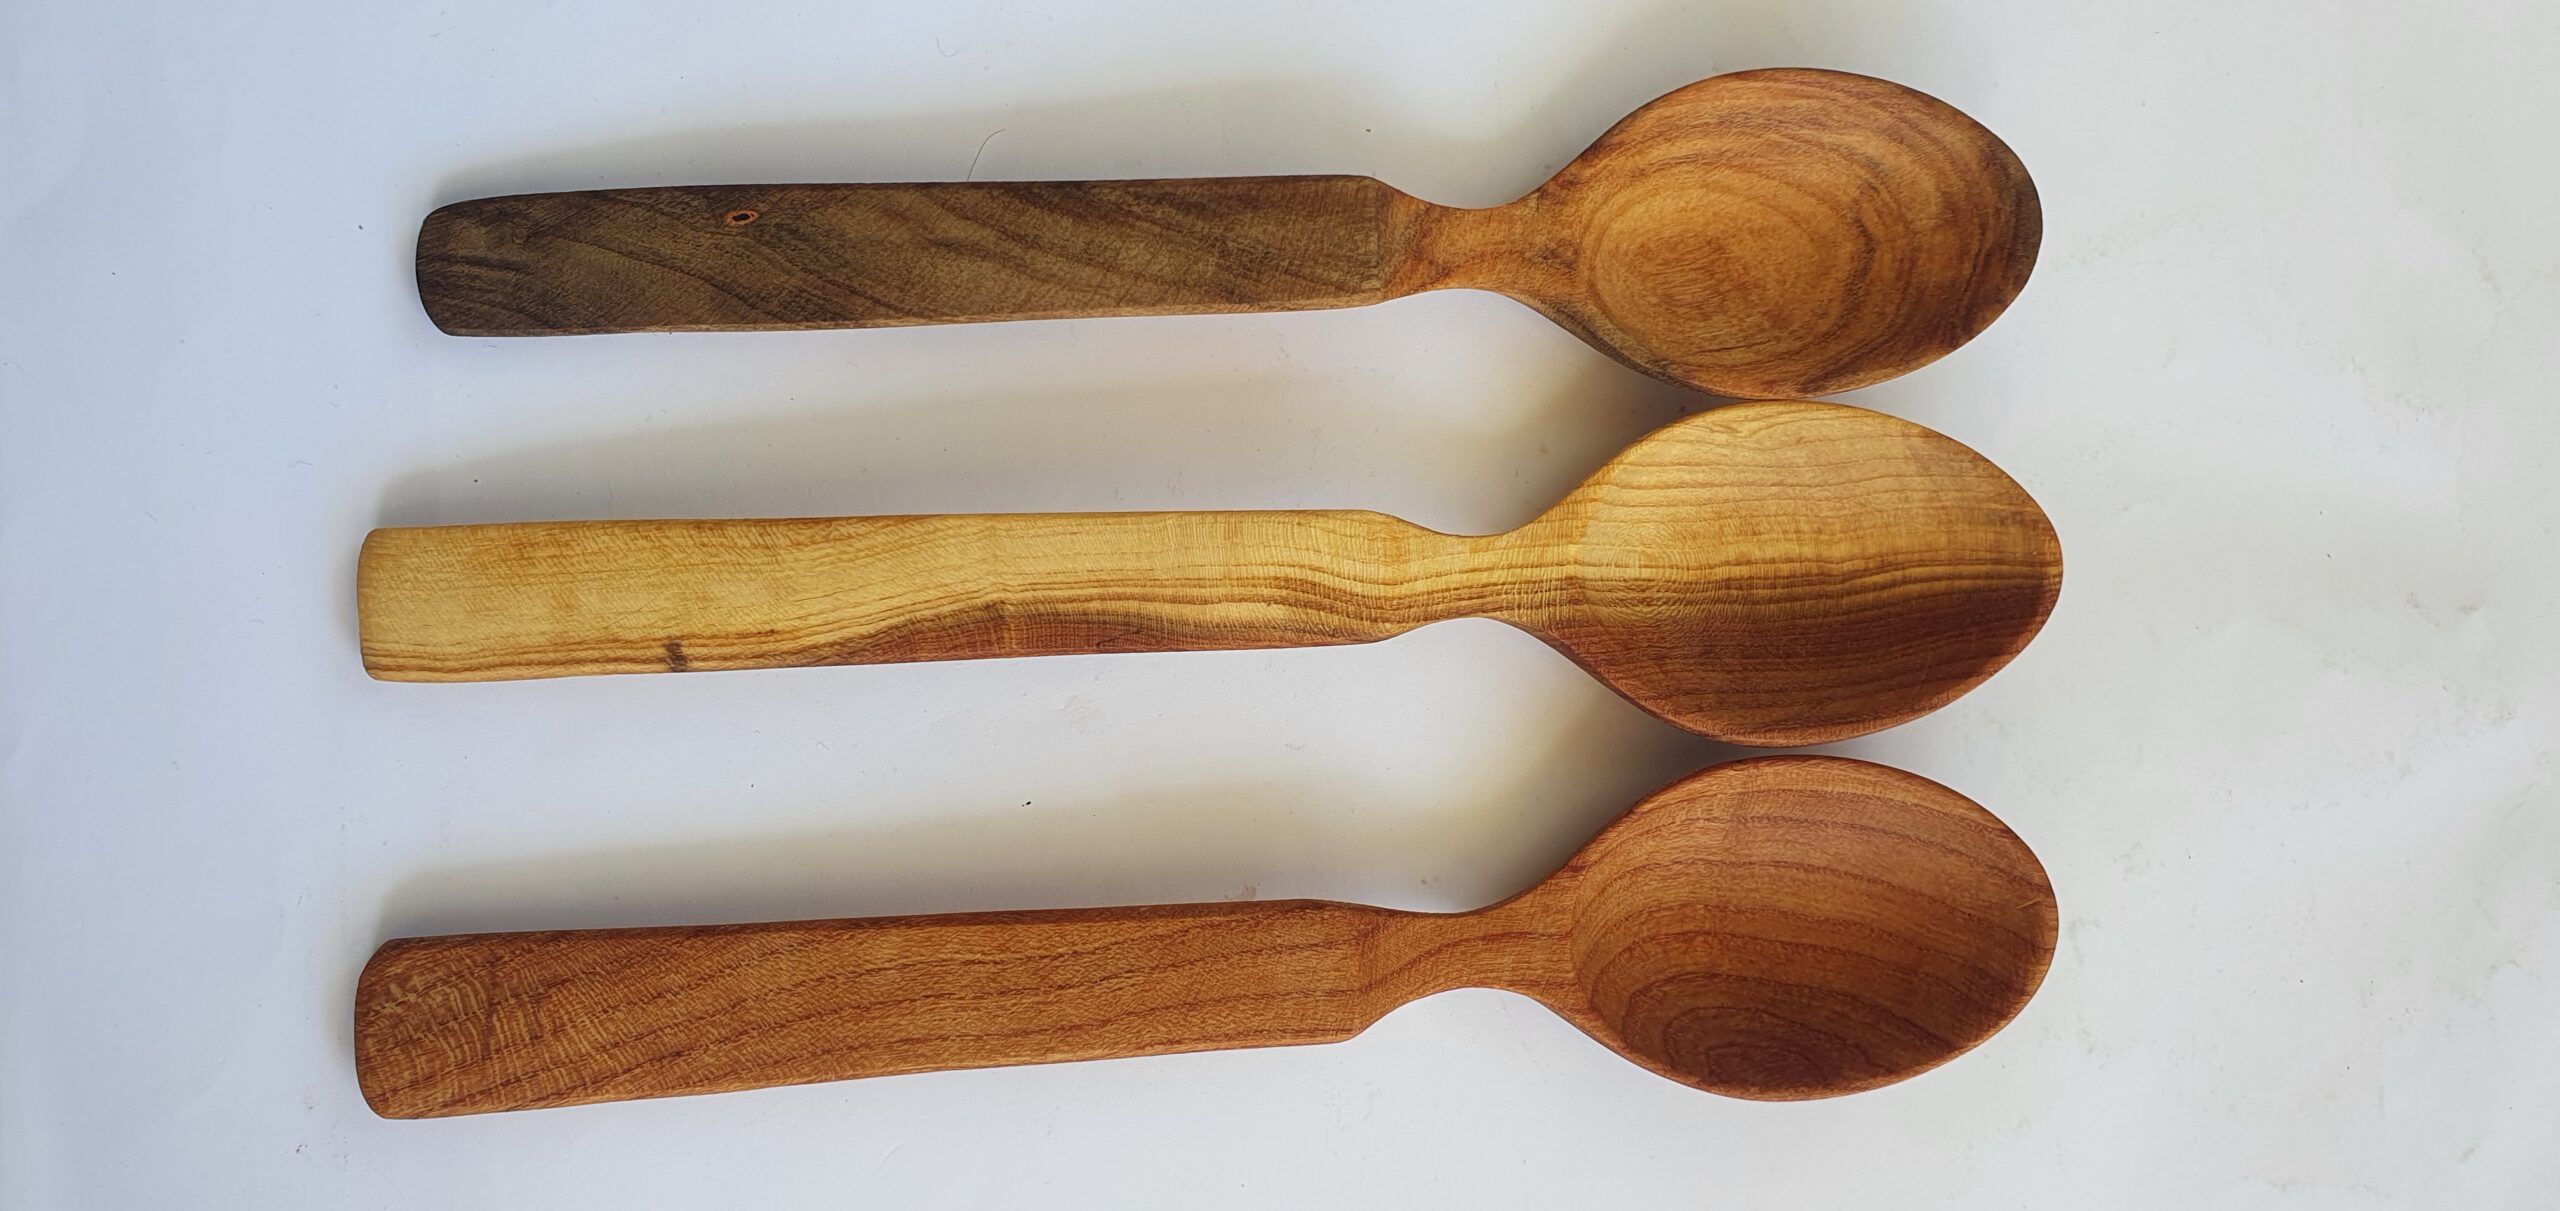 Handmade Wooden Spoon Rice-3 Pcs